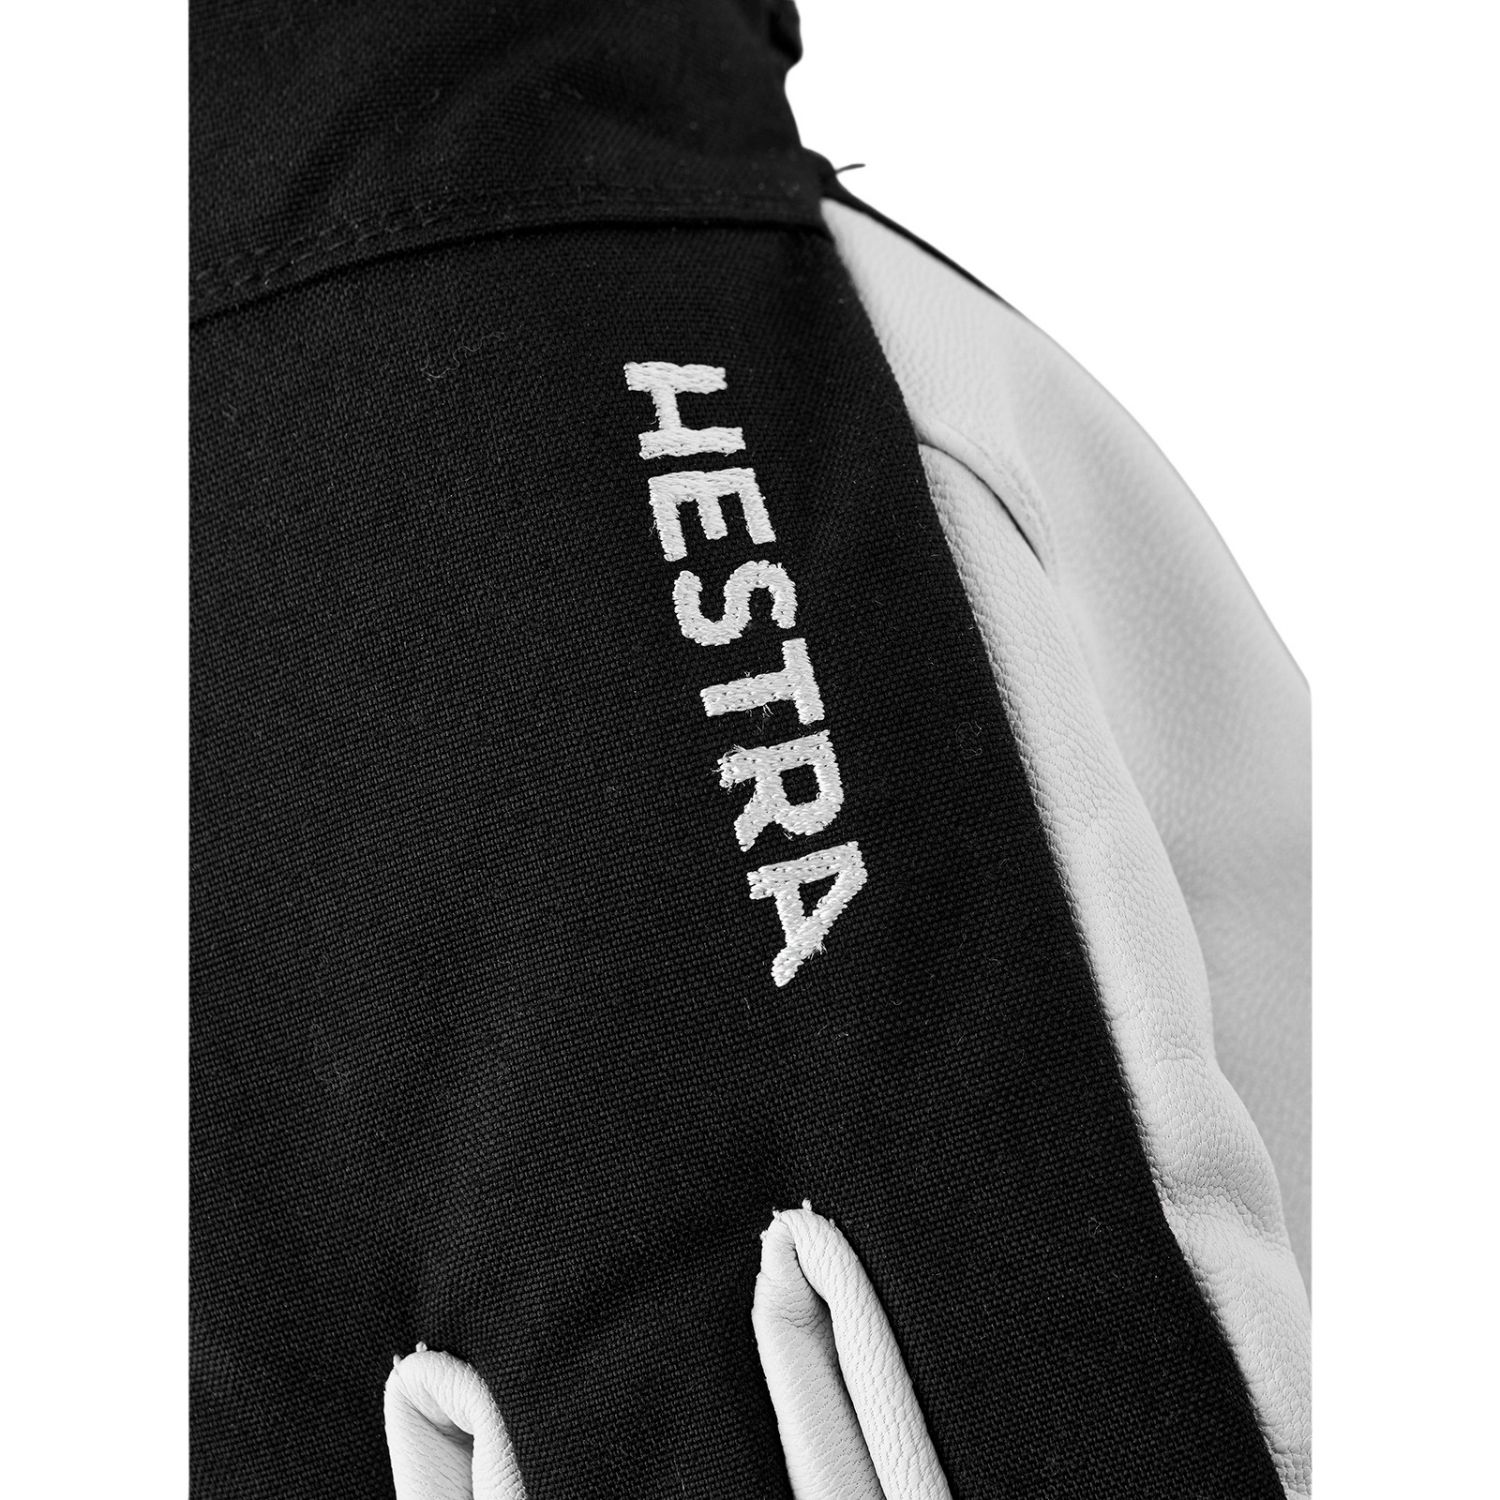 Hestra Army Leather Heli hiihtohanskat, musta